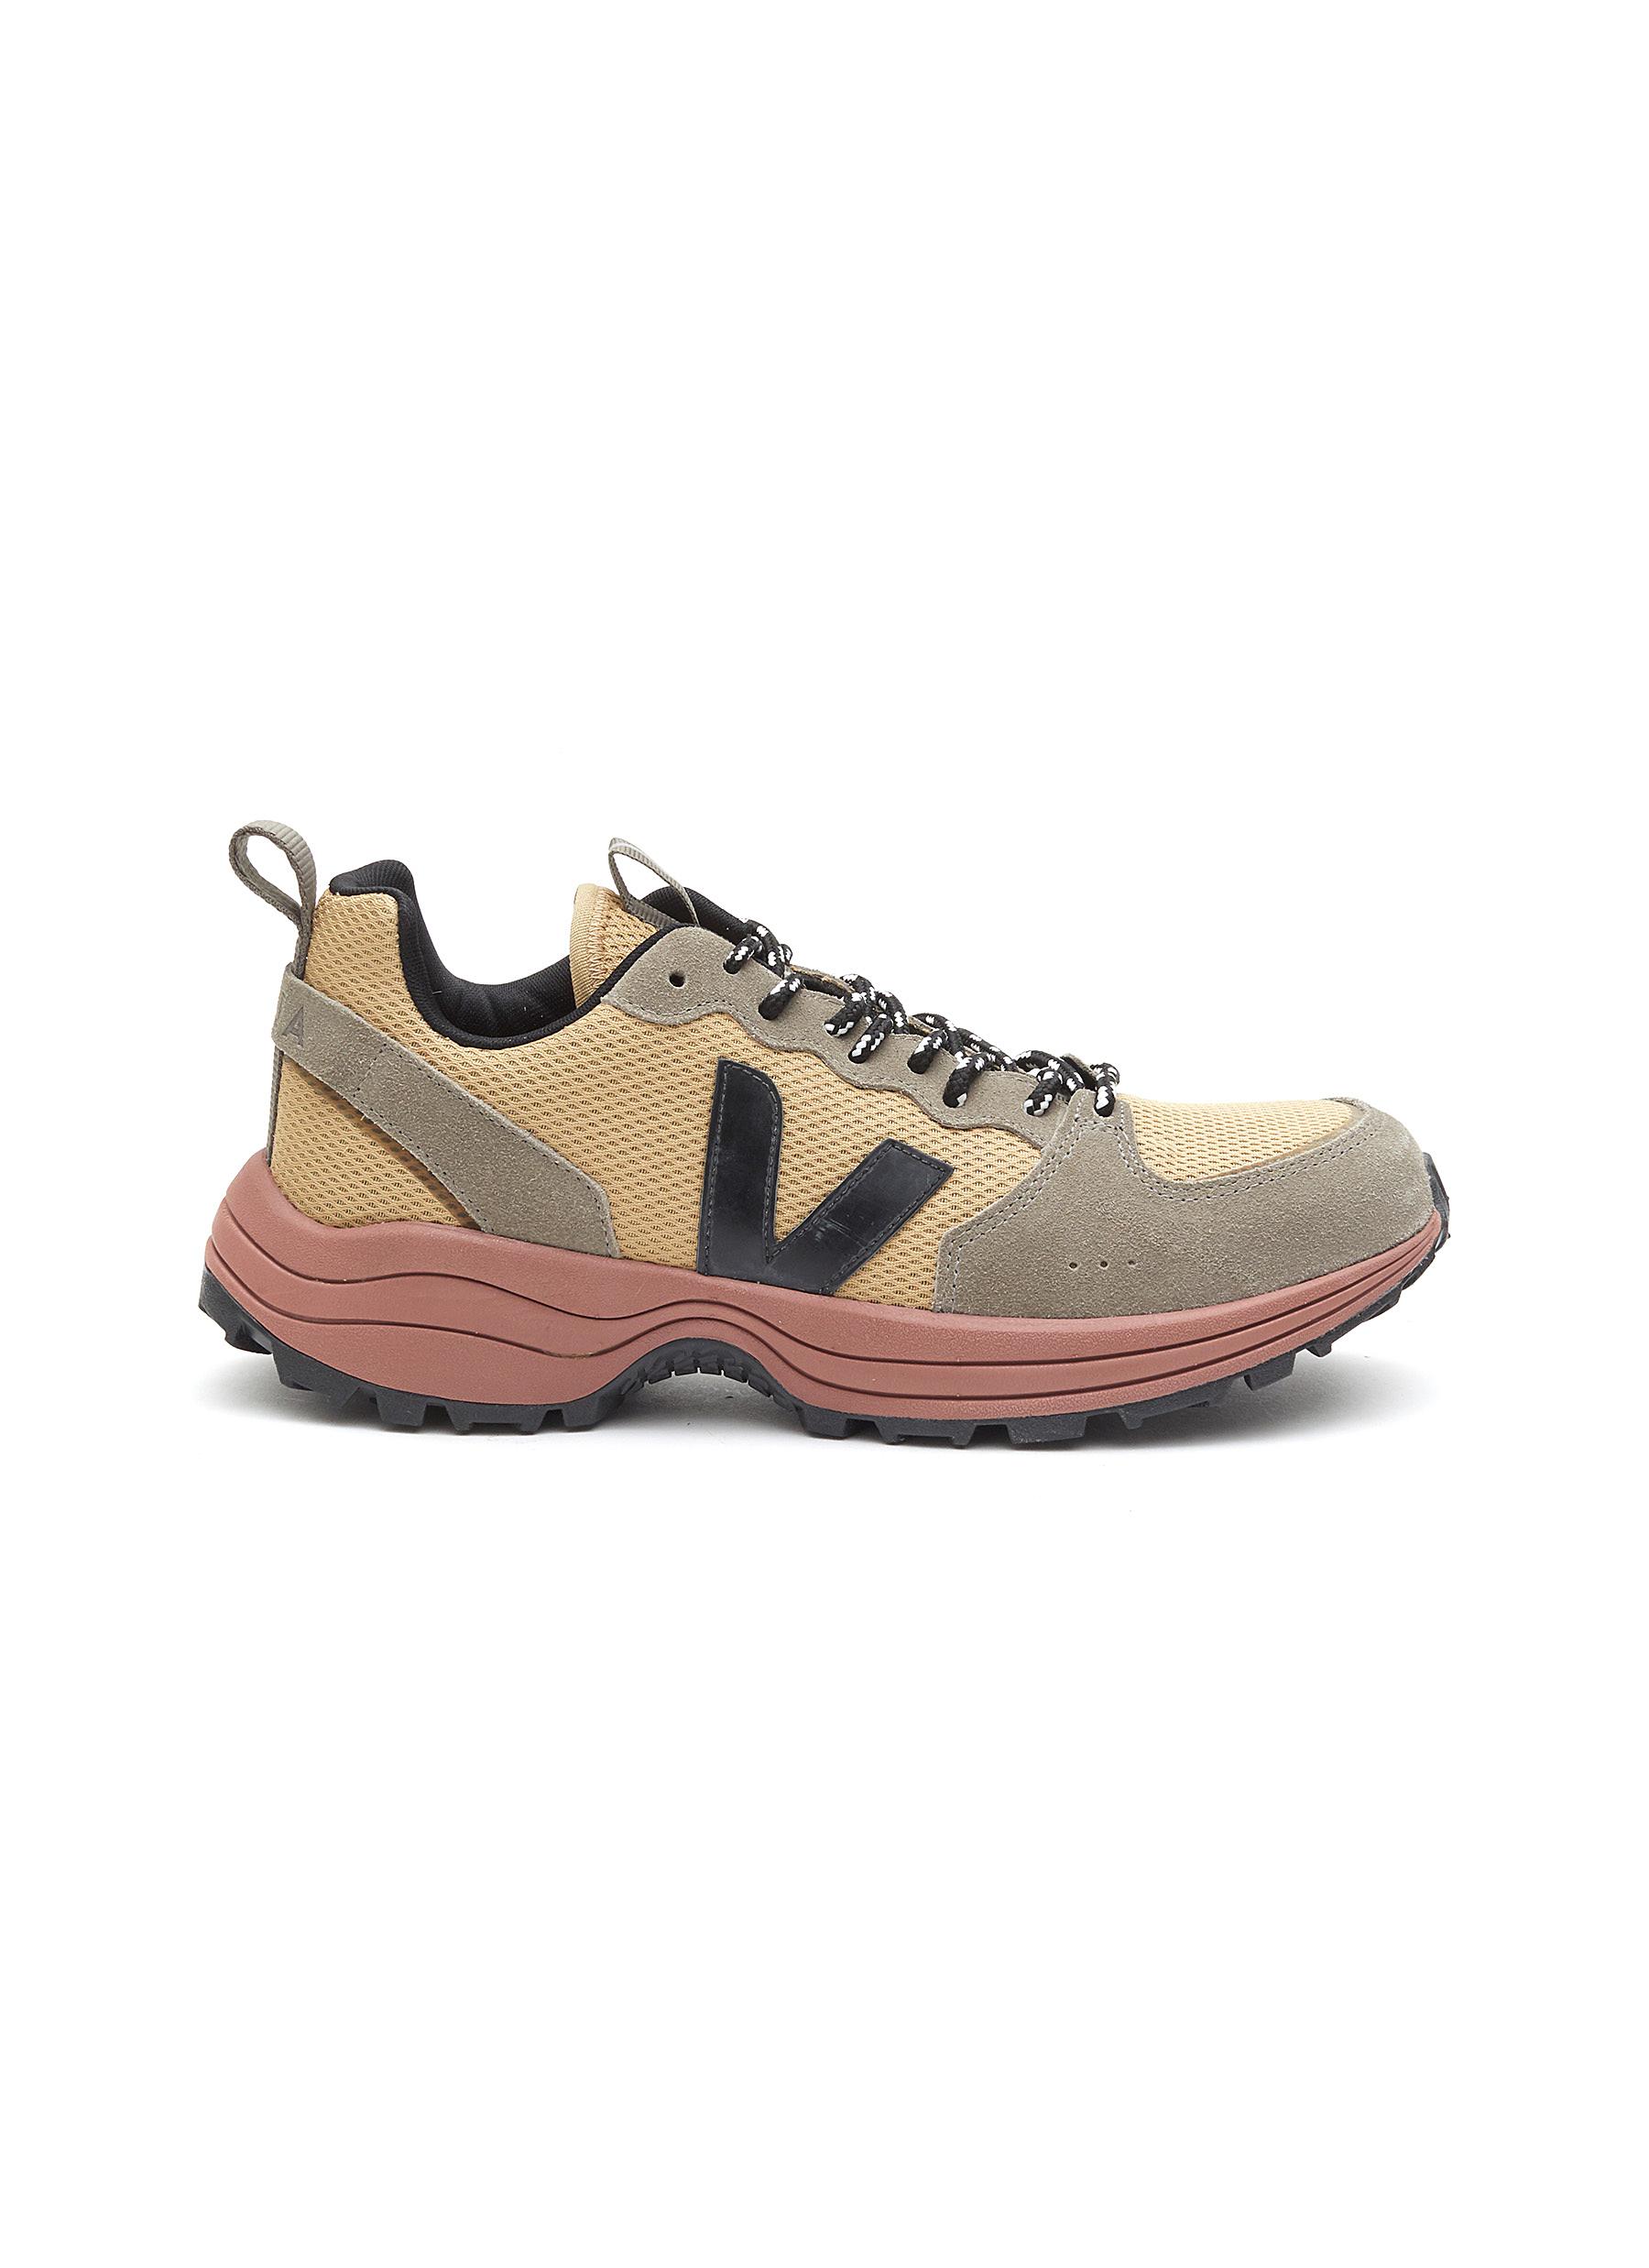 'Venturi' Suede Alveomesh Lace-Up Sneakers